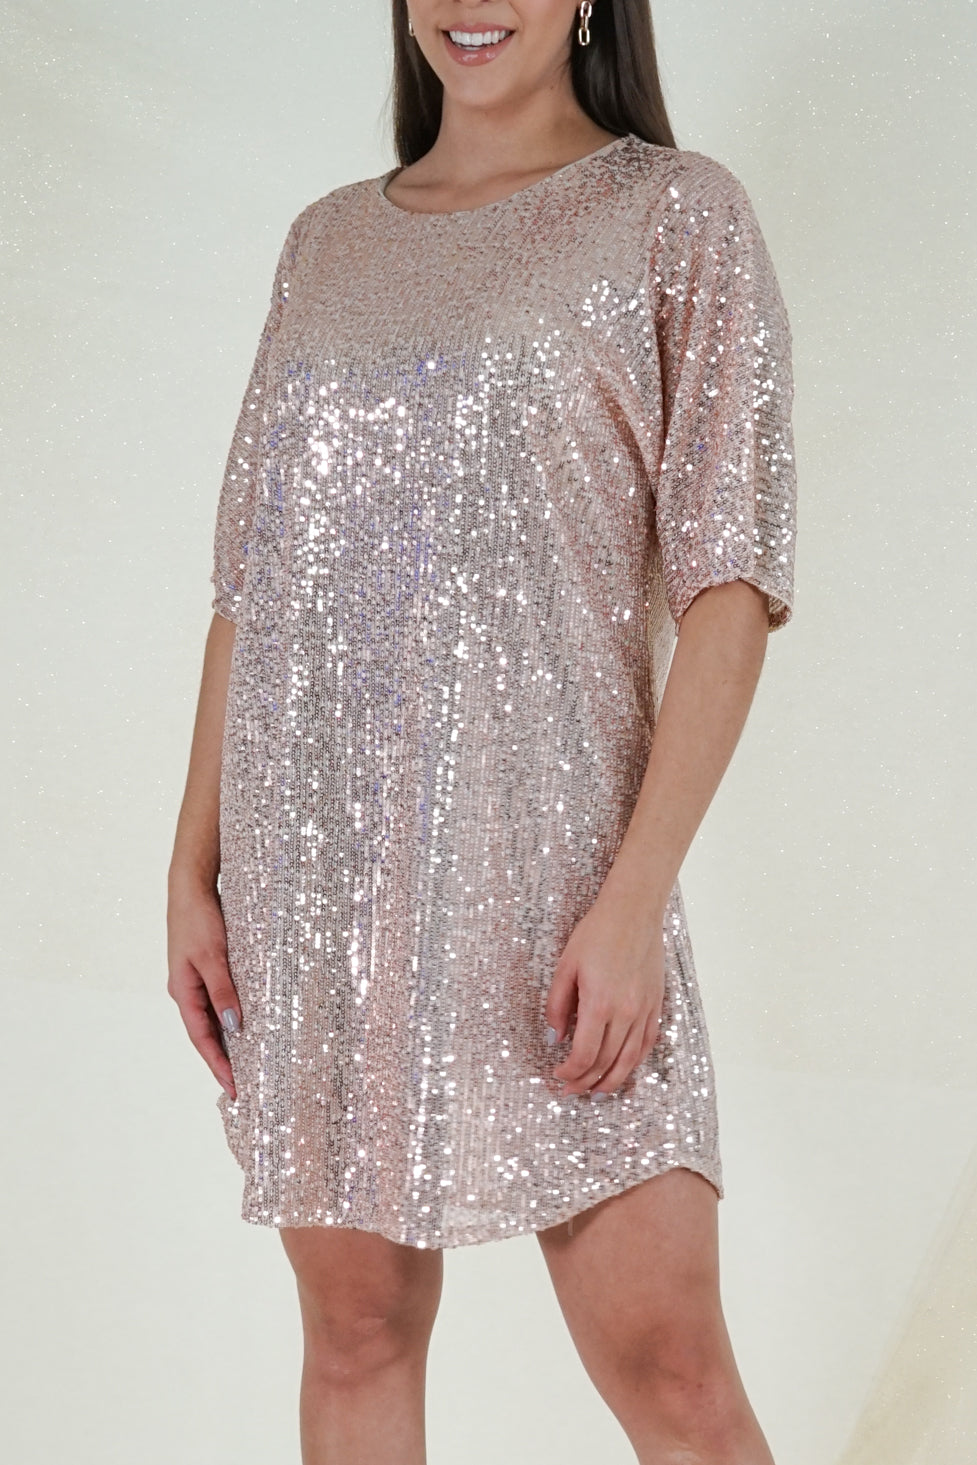 sparkly shirt dress